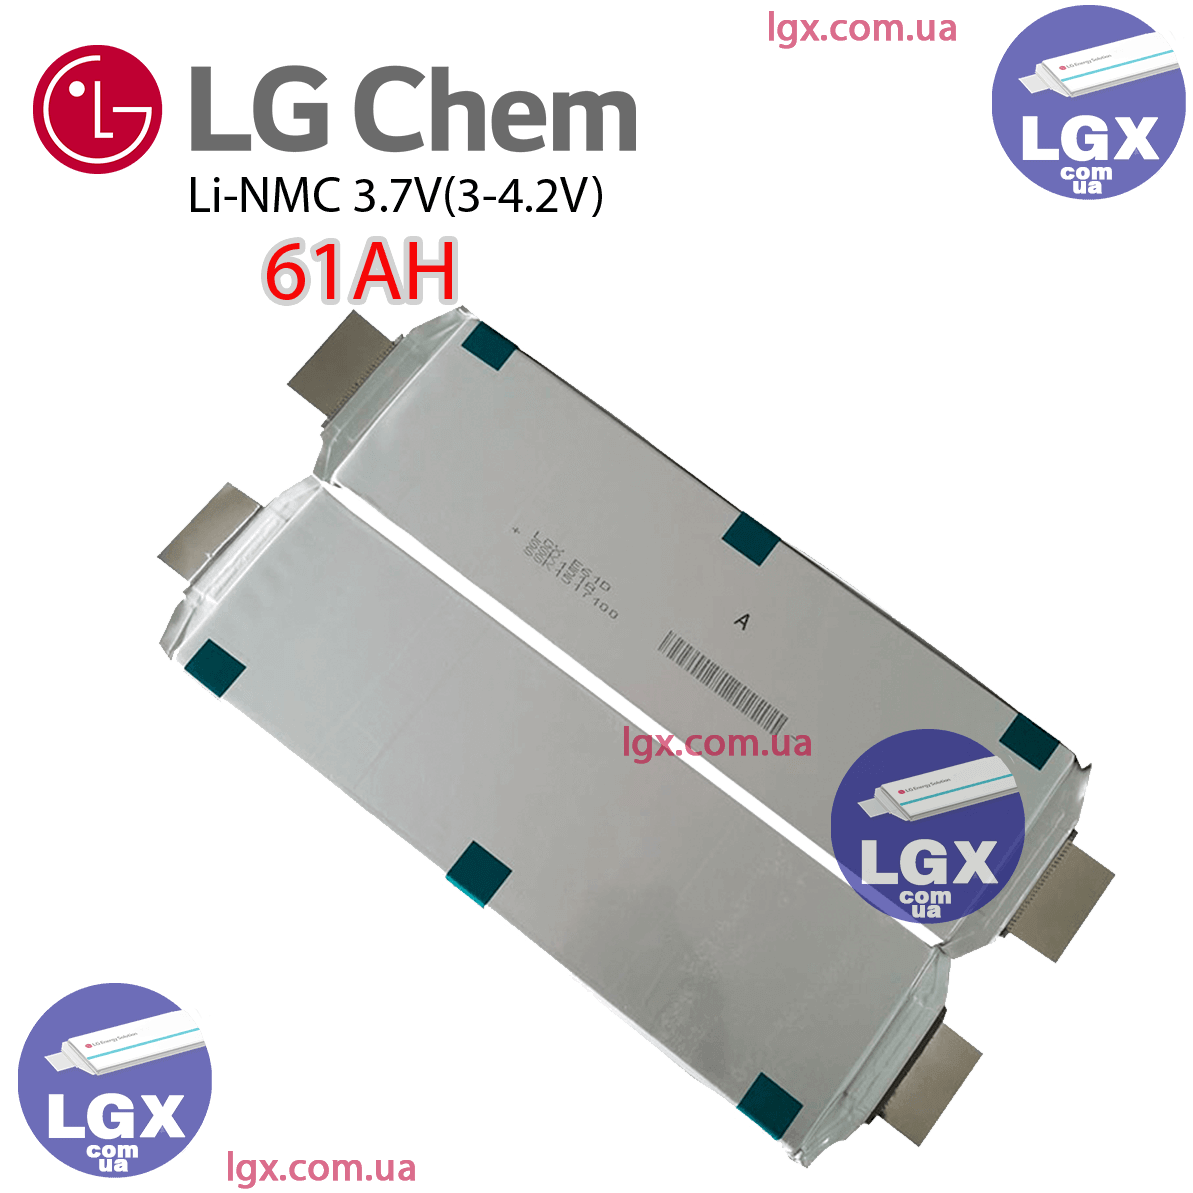 Аккумуляторный елемент LG-Chem LGX-e61 химия NMC 3.6v (пакет) емкость 61А/Ч разряд 3-5c 2000 циклов 880грам